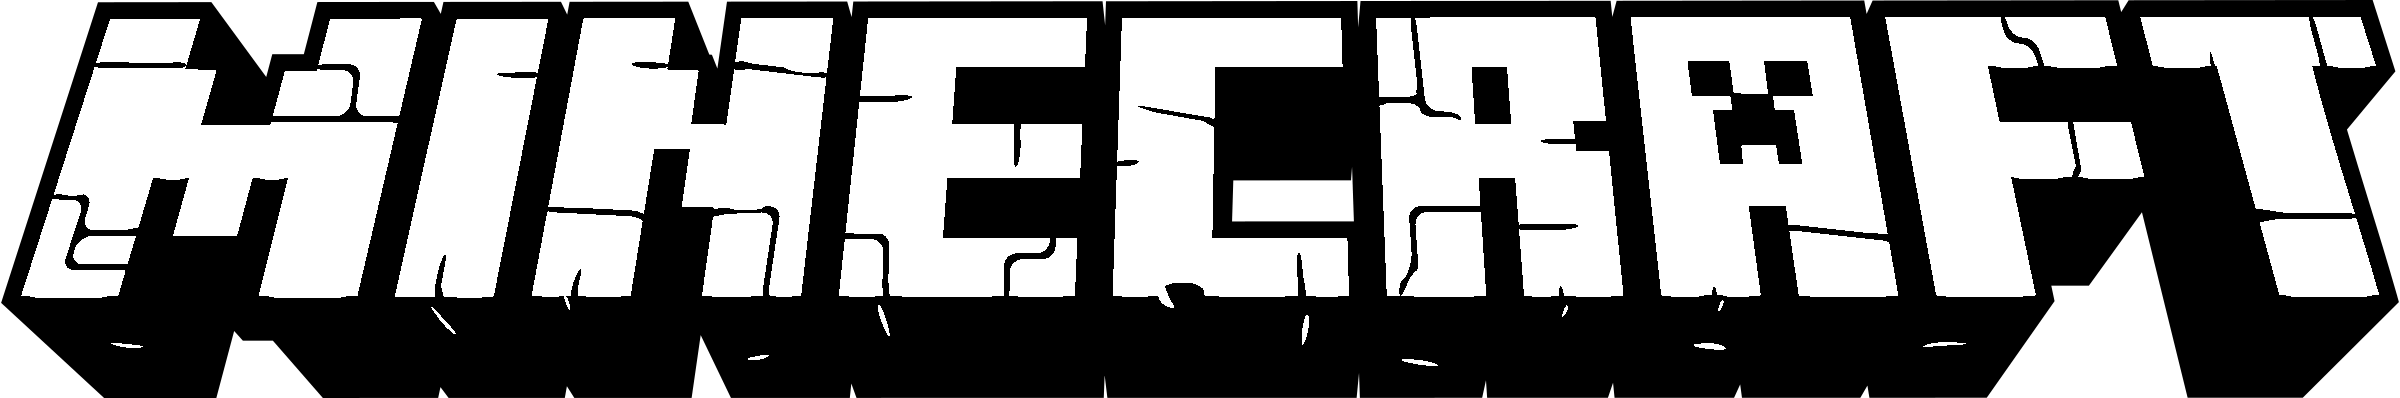 Mionecraft Logo - Minecraft Logo PNG Transparent & SVG Vector